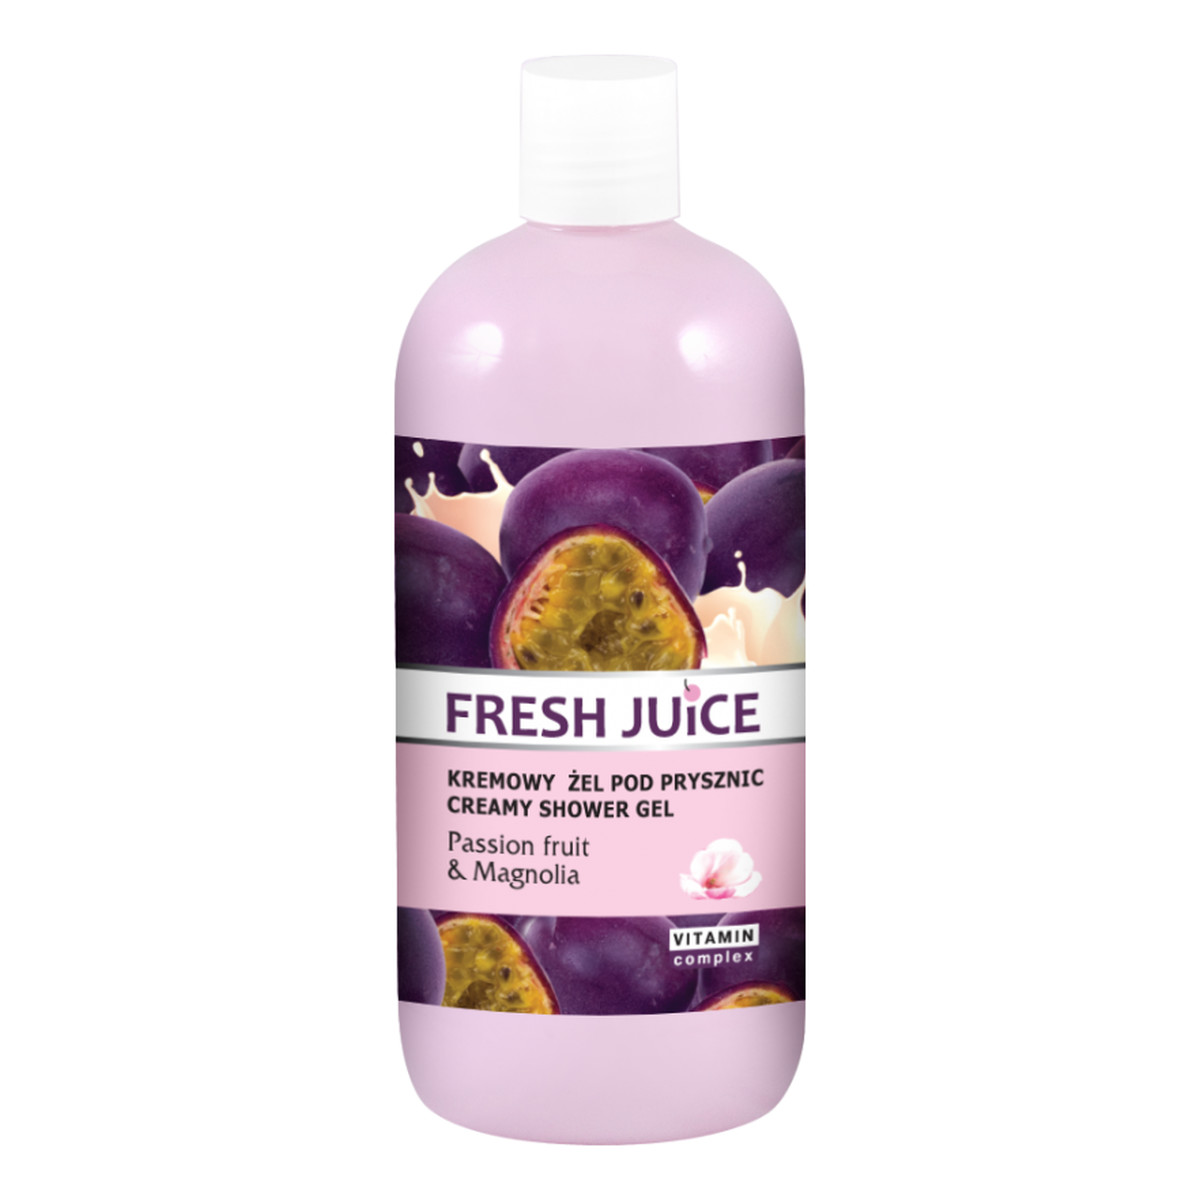 Fresh Juice Passion fruit & Magnolia Kremowy Żel Pod Prysznic 500ml